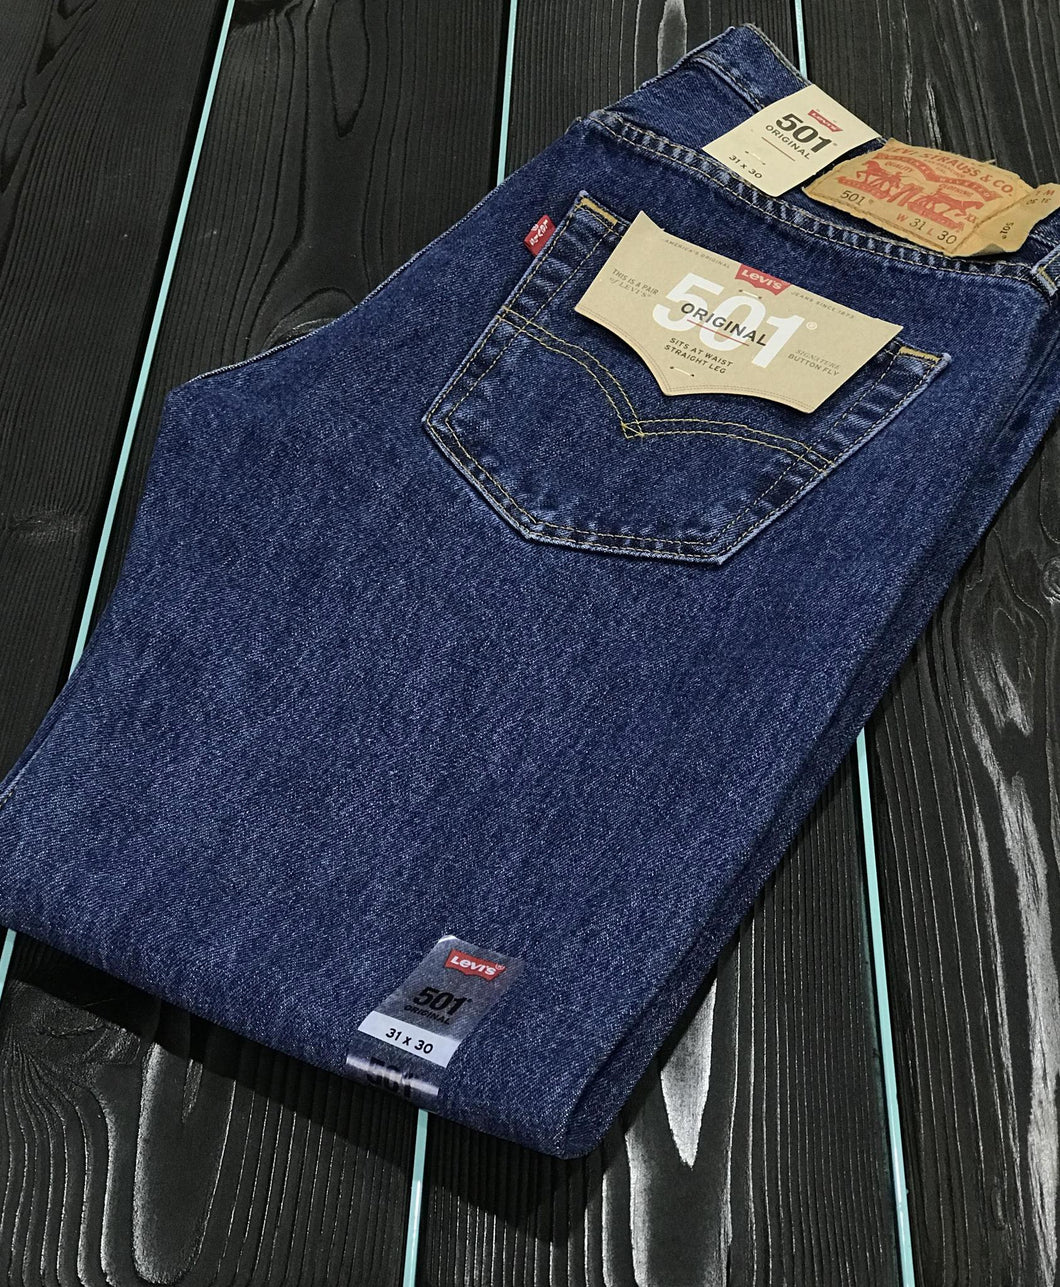 Levi's 501 Original Fit Jeans - Dark Stonewash